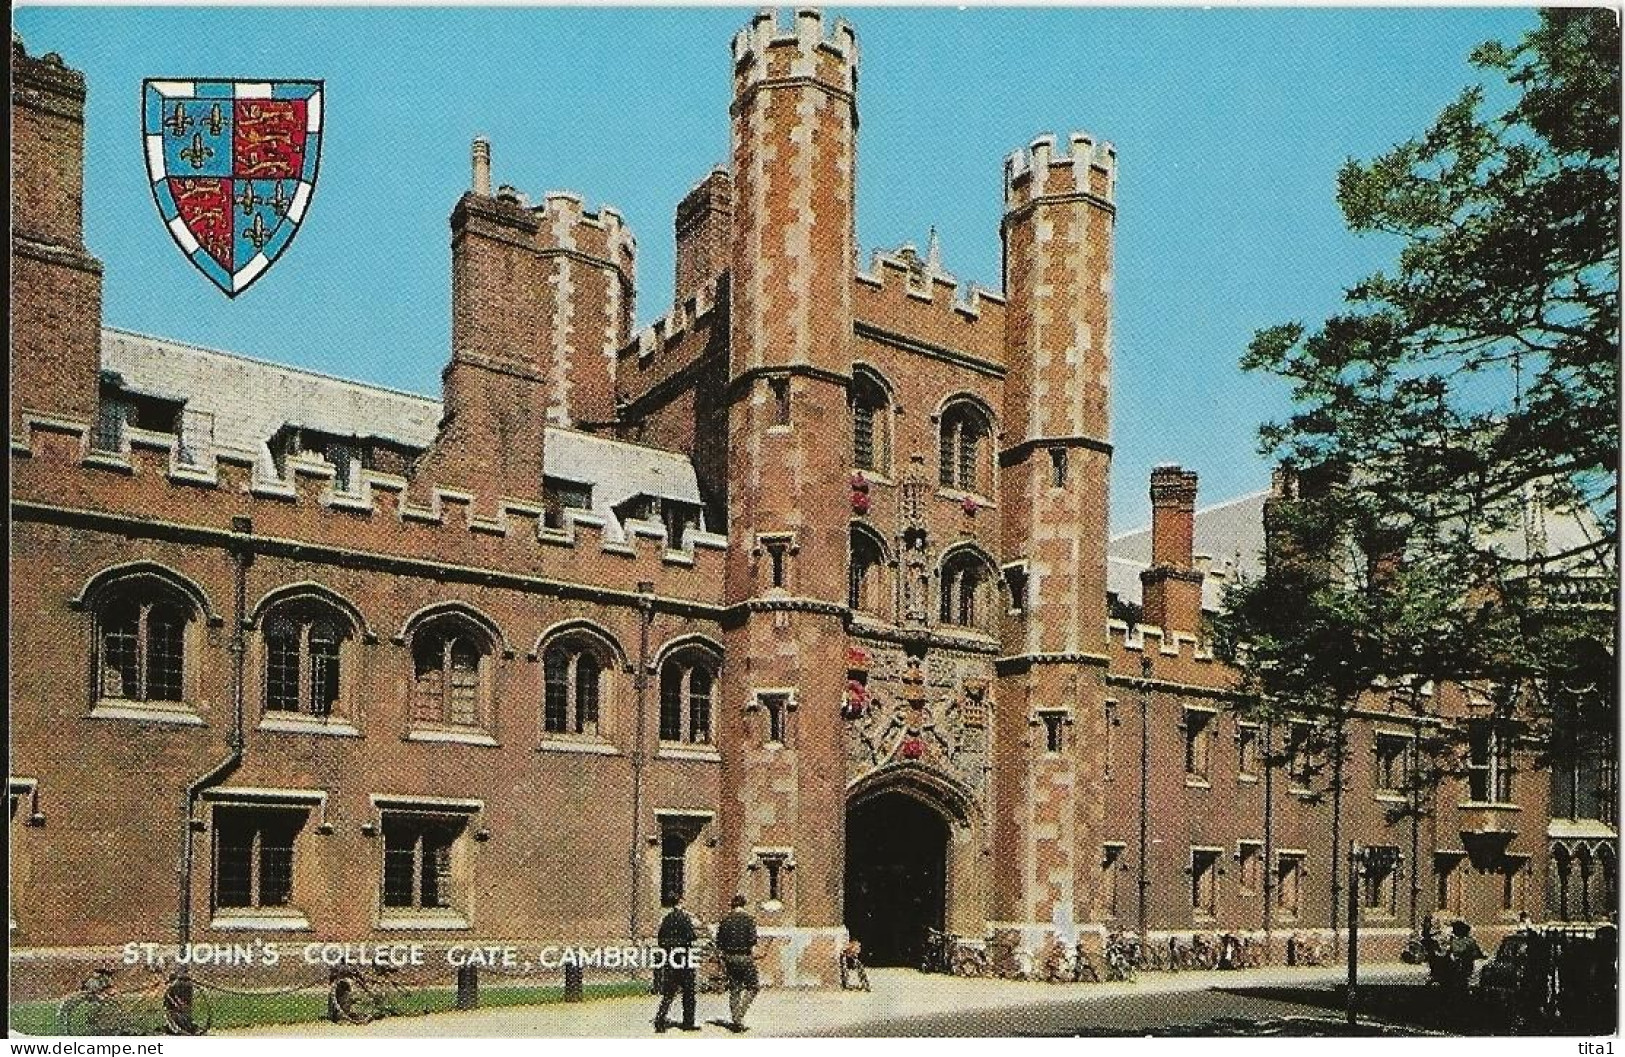 185 - St. John's College Gate, Cambridge - Cambridge